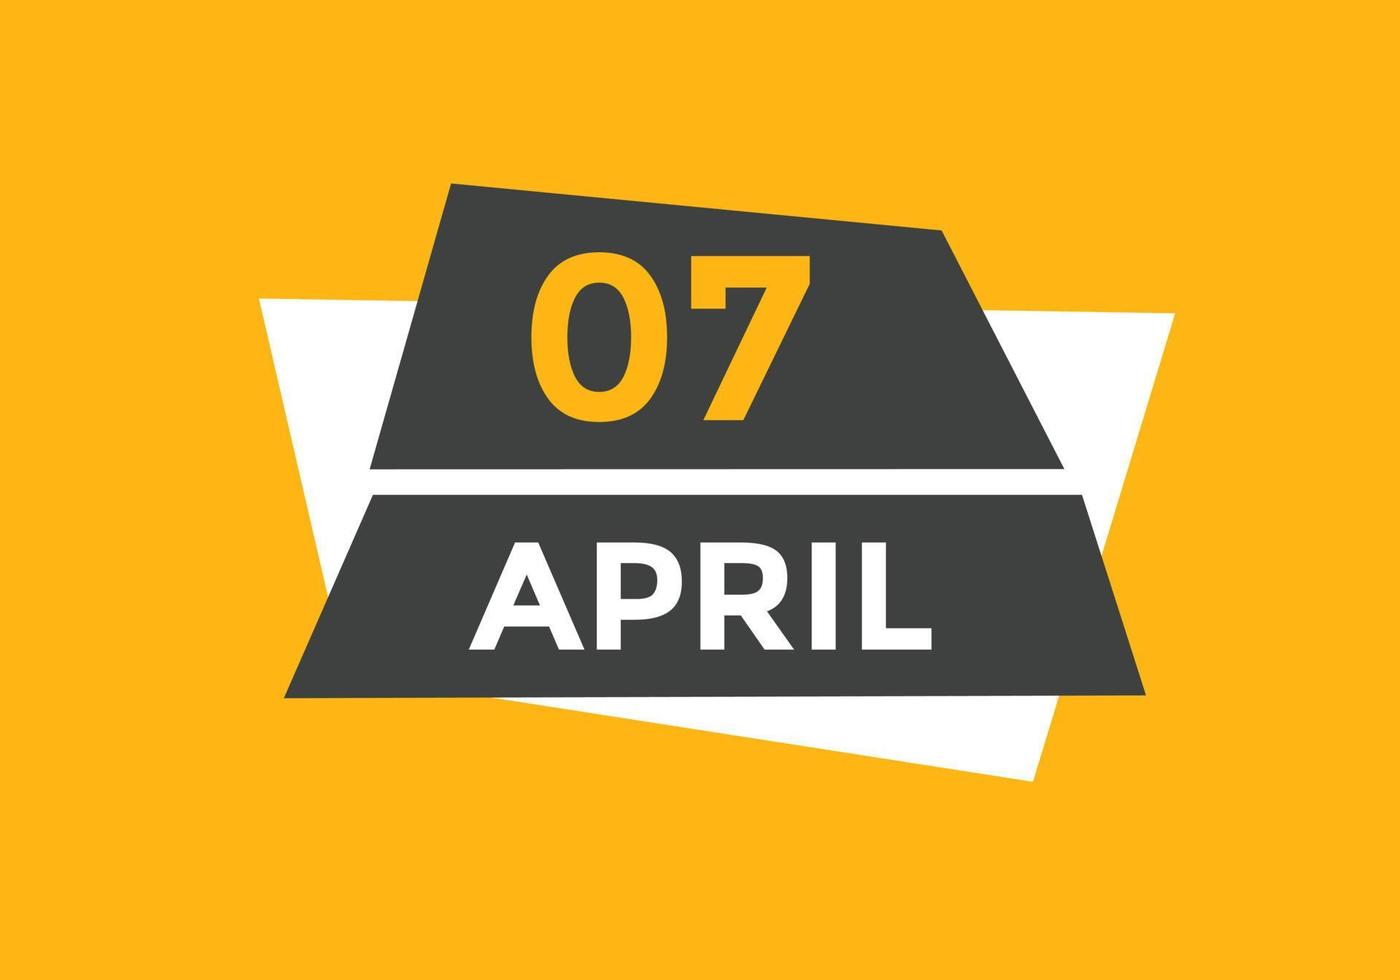 april 7 kalender påminnelse. 7:e april dagligen kalender ikon mall. kalender 7:e april ikon design mall. vektor illustration